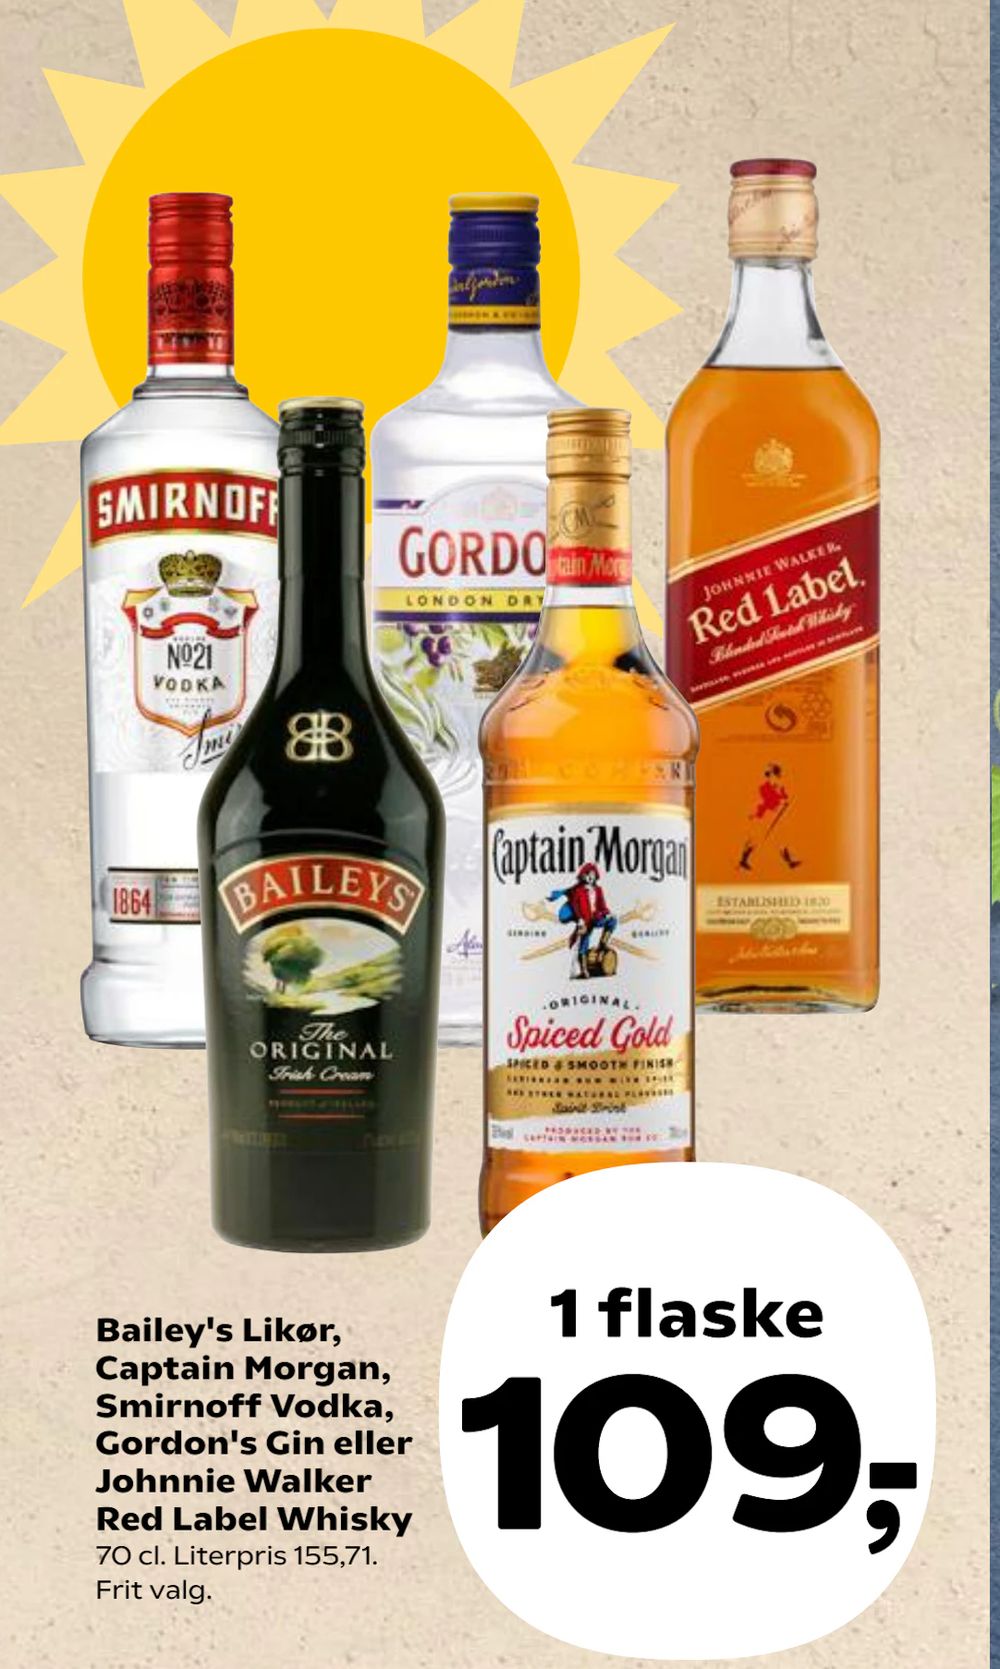 Tilbud på Bailey's Likør, Captain Morgan, Smirnoff Vodka, Gordon's Gin eller Johnnie Walker Red Label Whisky fra Kvickly til 109 kr.